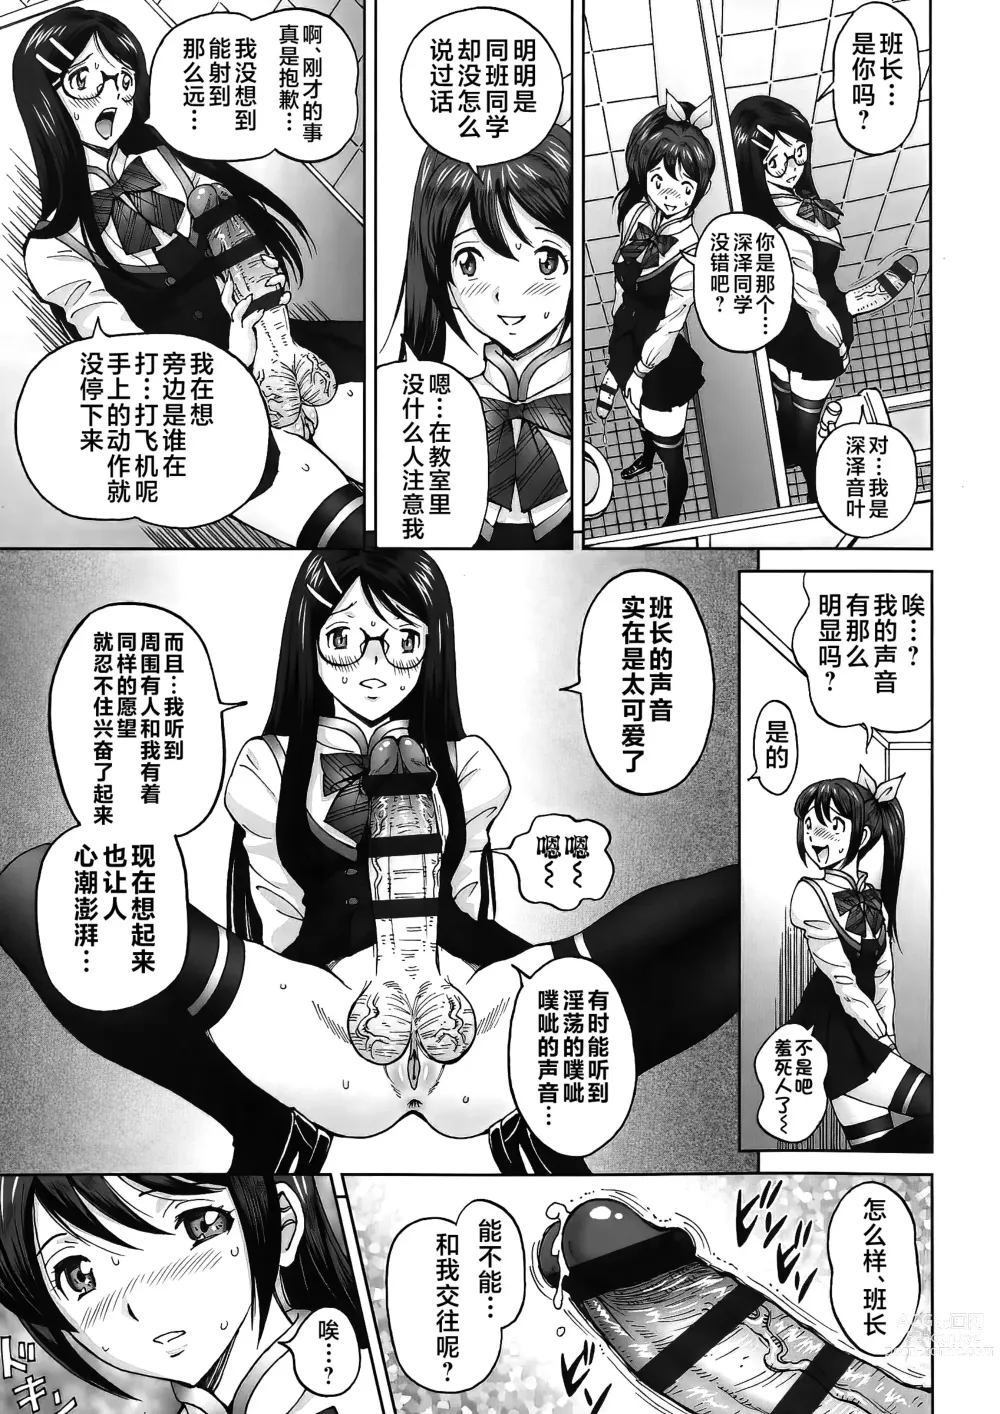 Page 9 of manga エンジョイNEWライフ 1-2